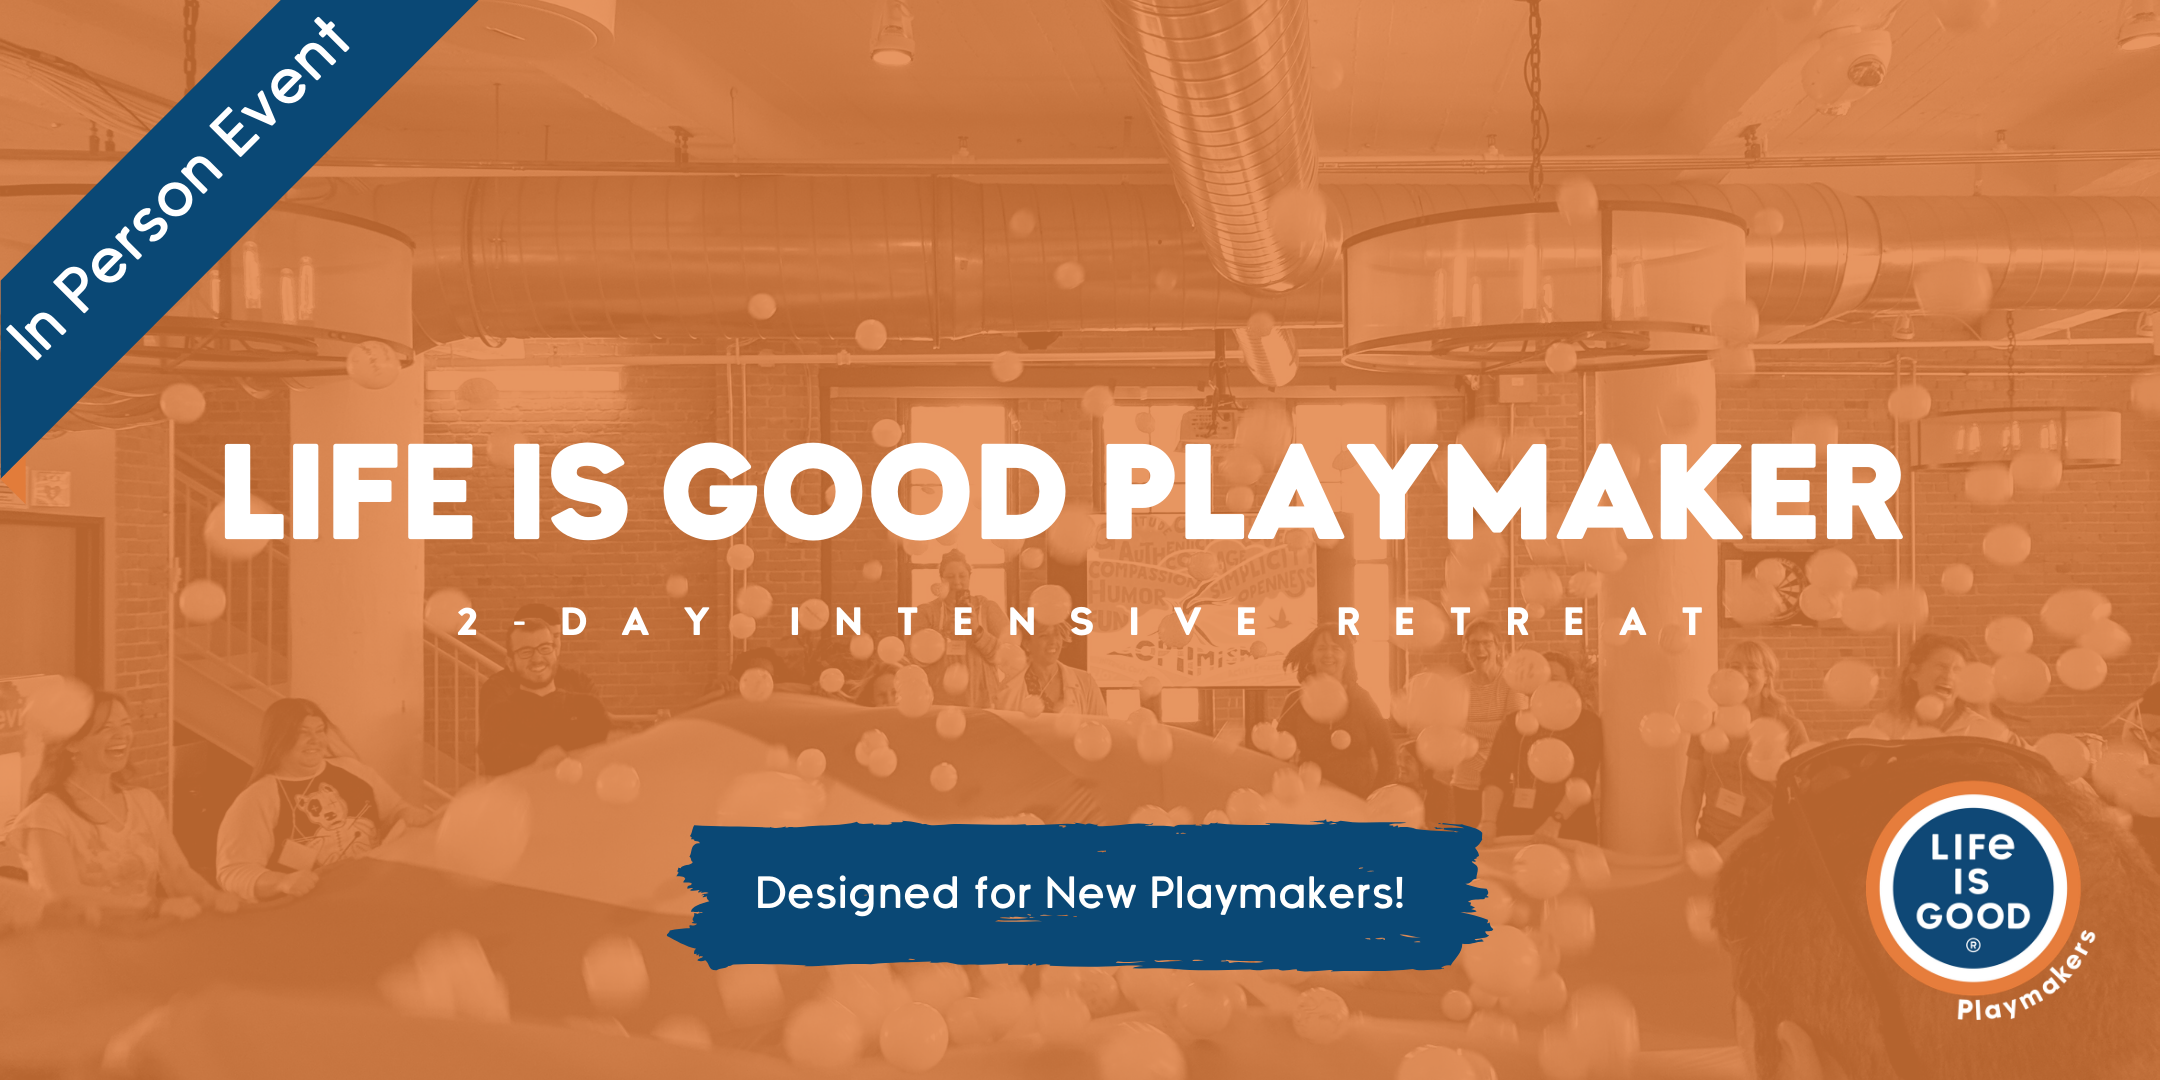 Playmaker 2-Day Intensive Retreat- December 2020